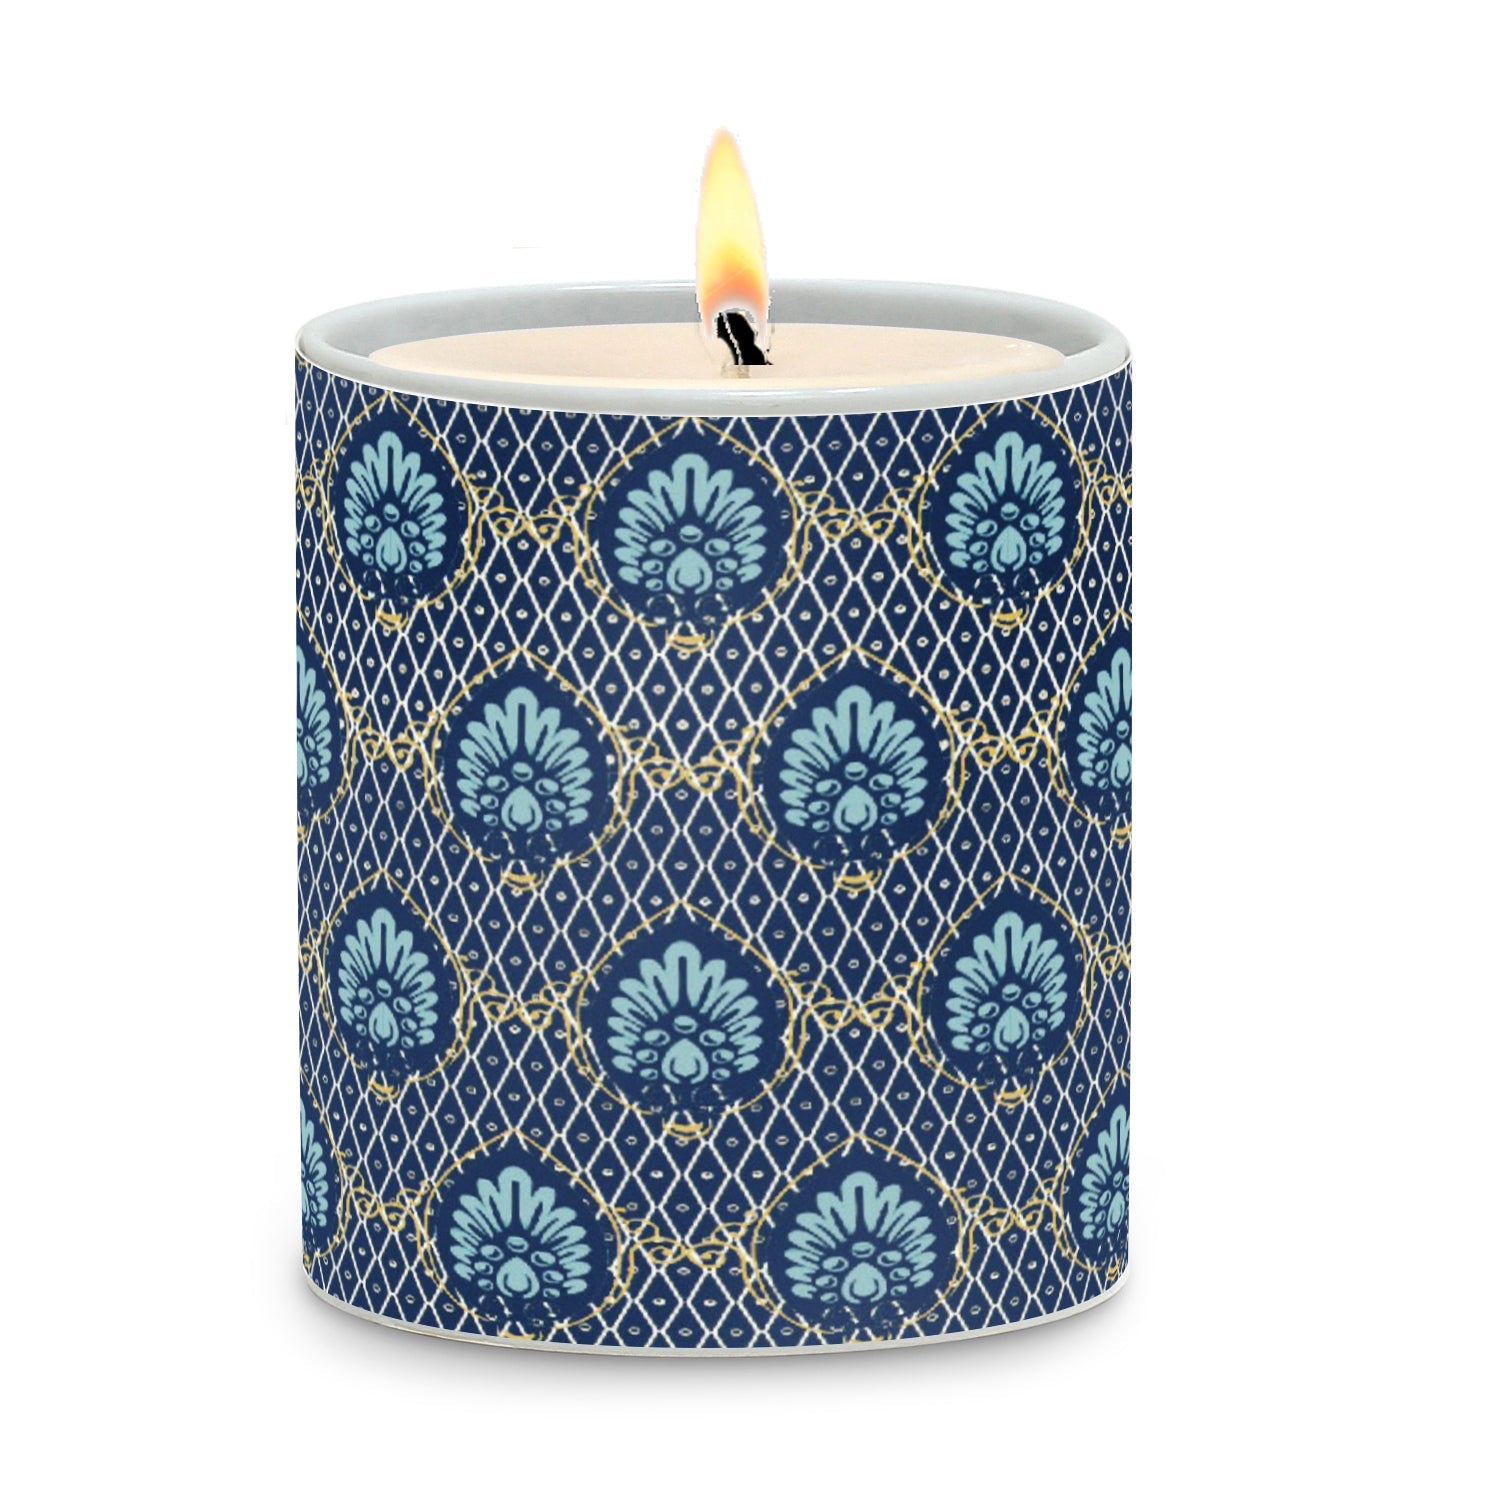 SUBLIMART: Geometric - Porcelain Soy Wax Candle 'Peacock' (Design #GEO05)